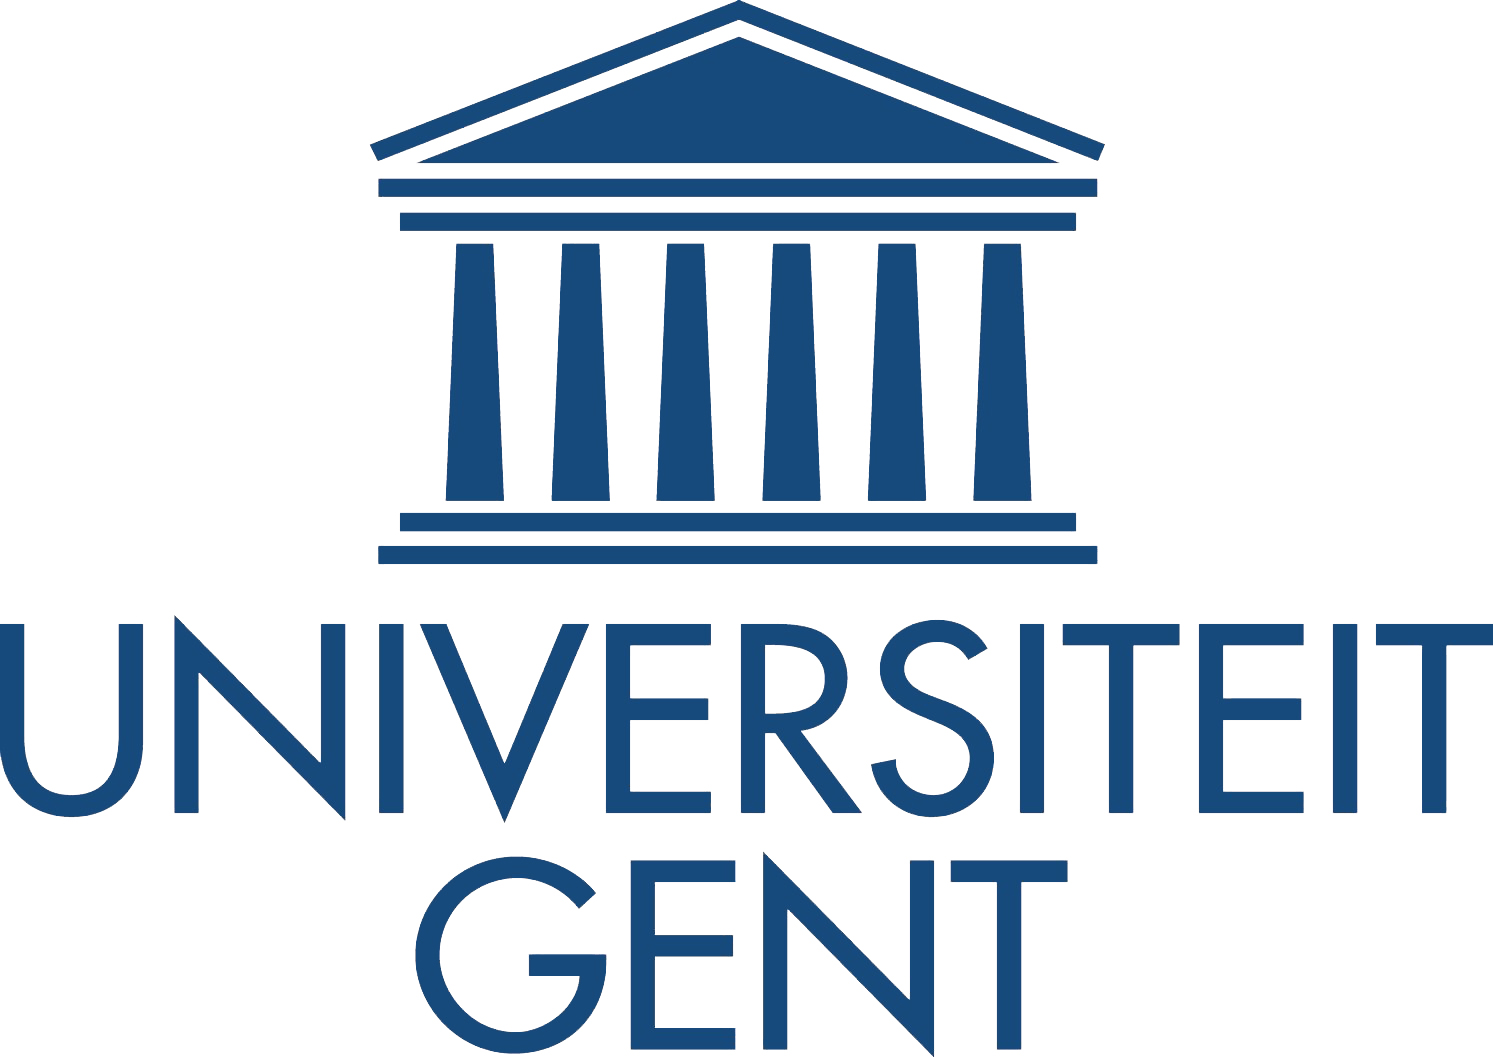 ghent university logo 04